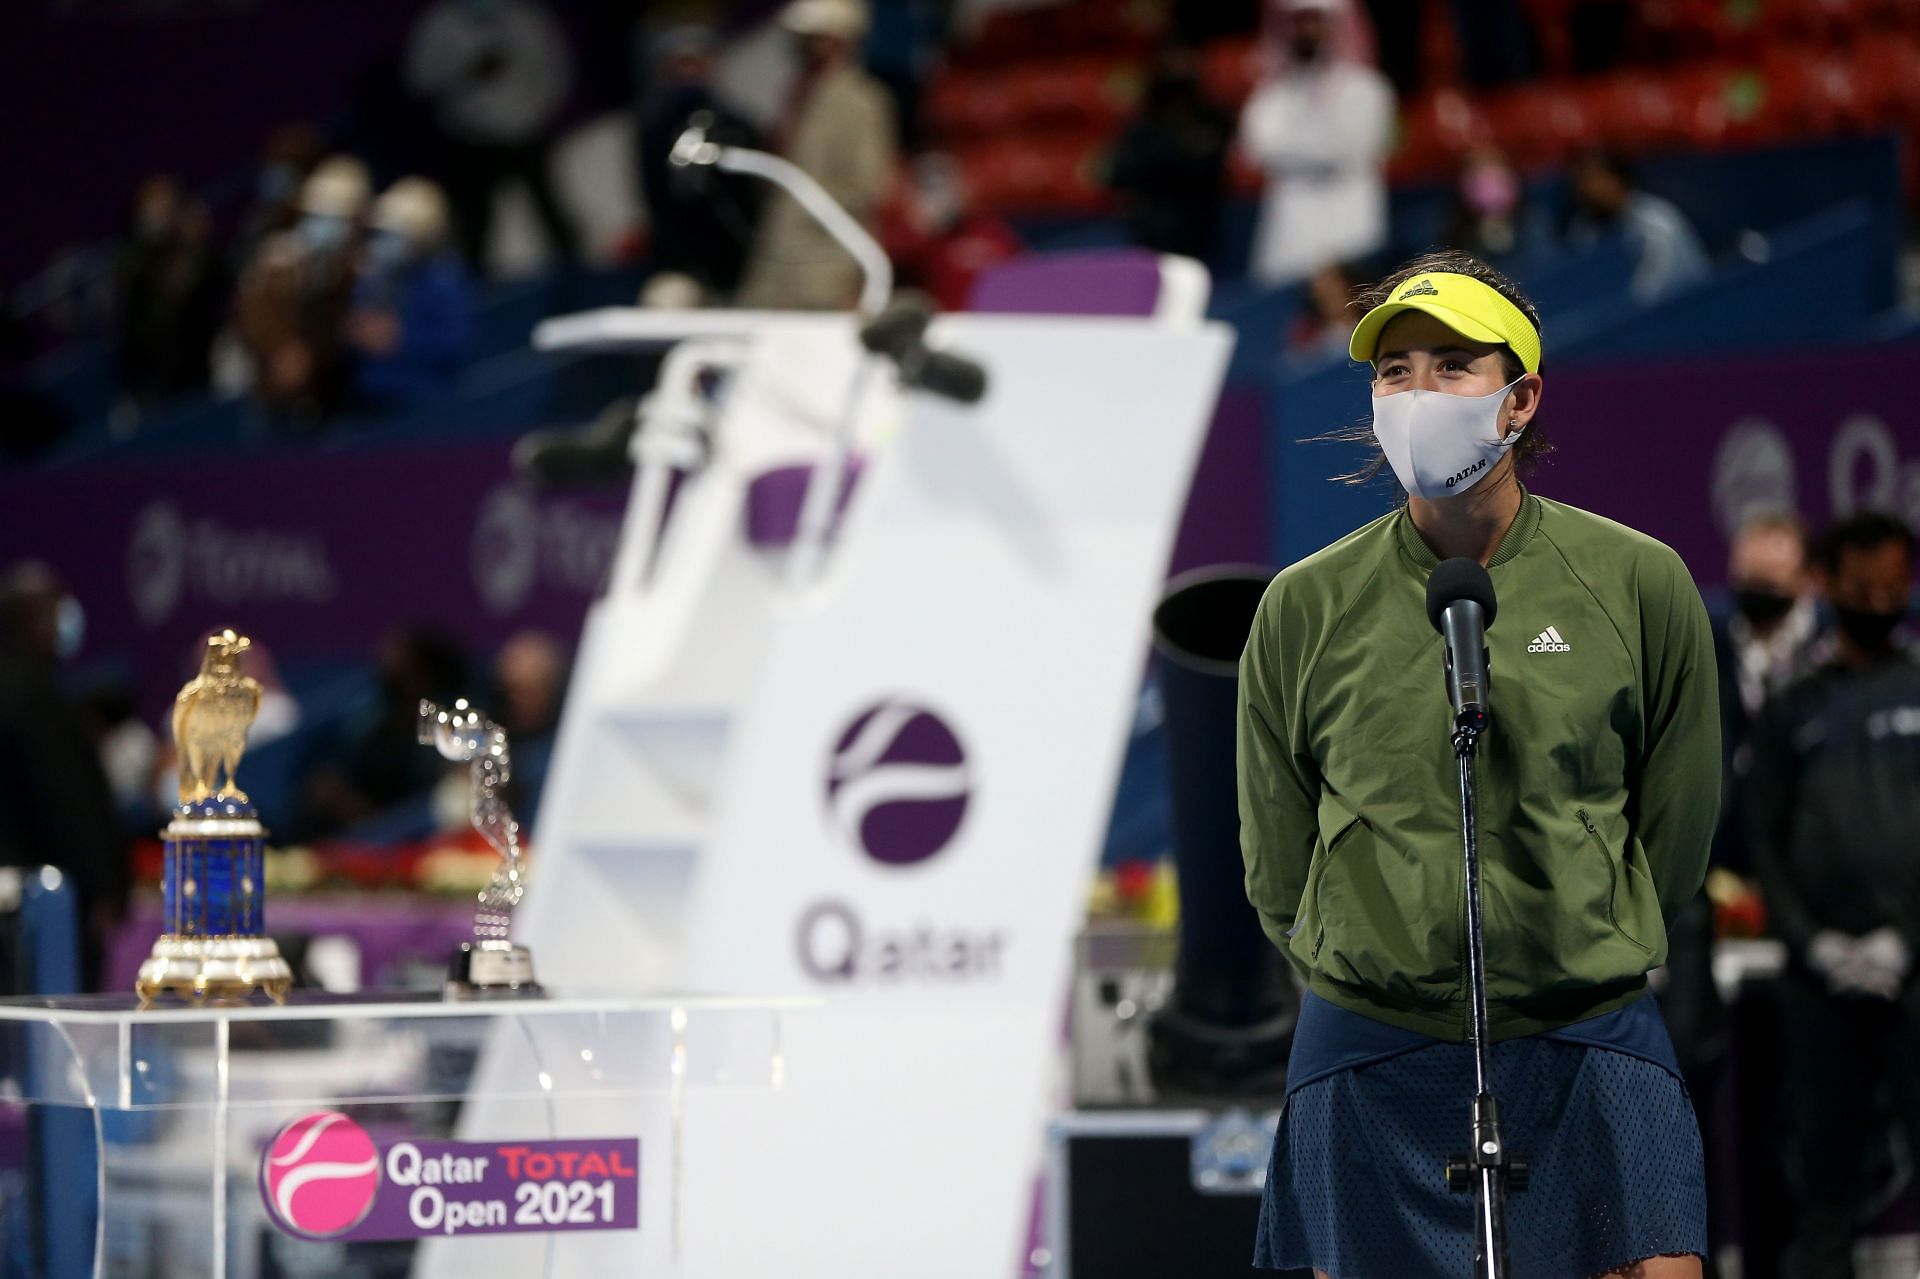 Garbine Muguruza was the runner-up at the Qatar Open last year